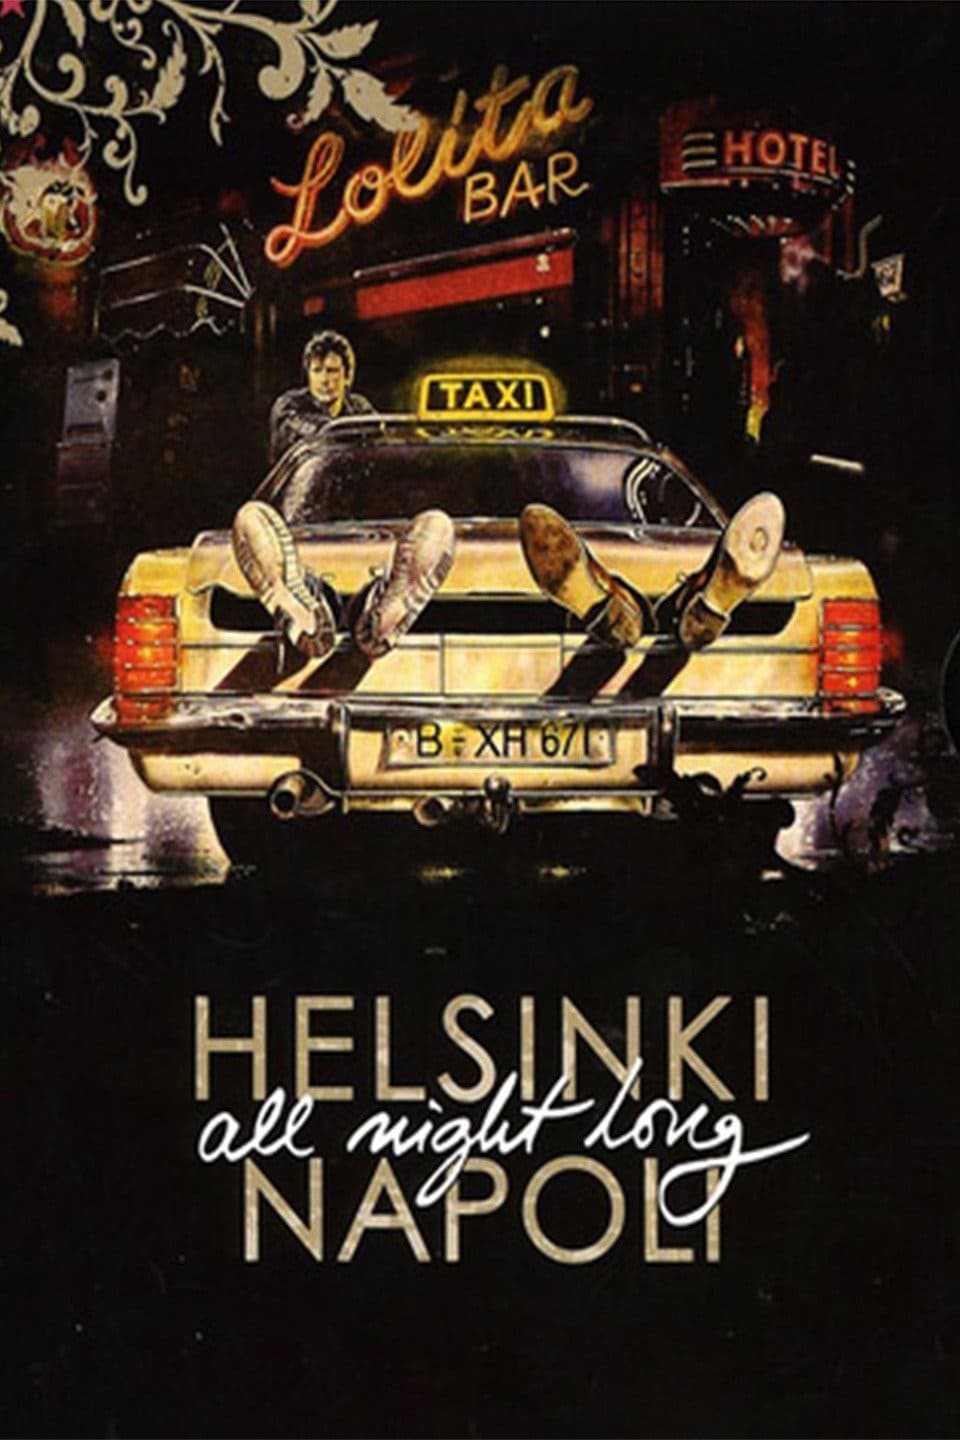 Helsinki Napoli - All Night Long (1987)